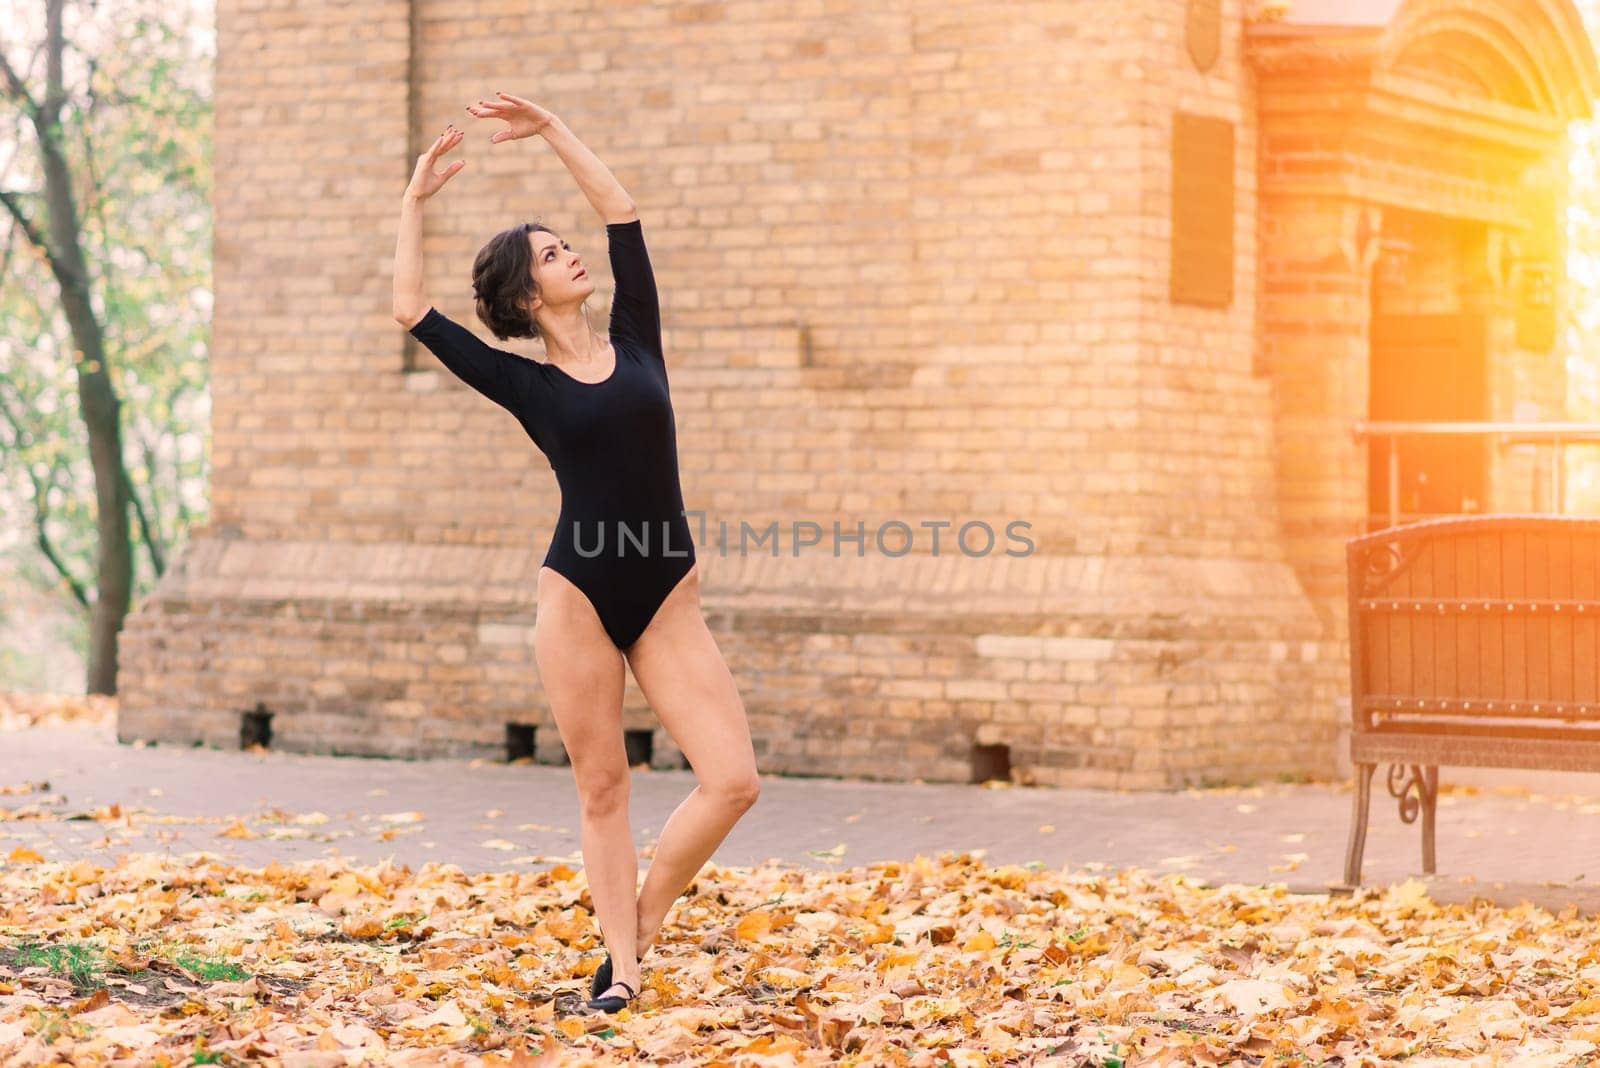 Beautiful female, ballerina, athlete in black bodysuit training in park